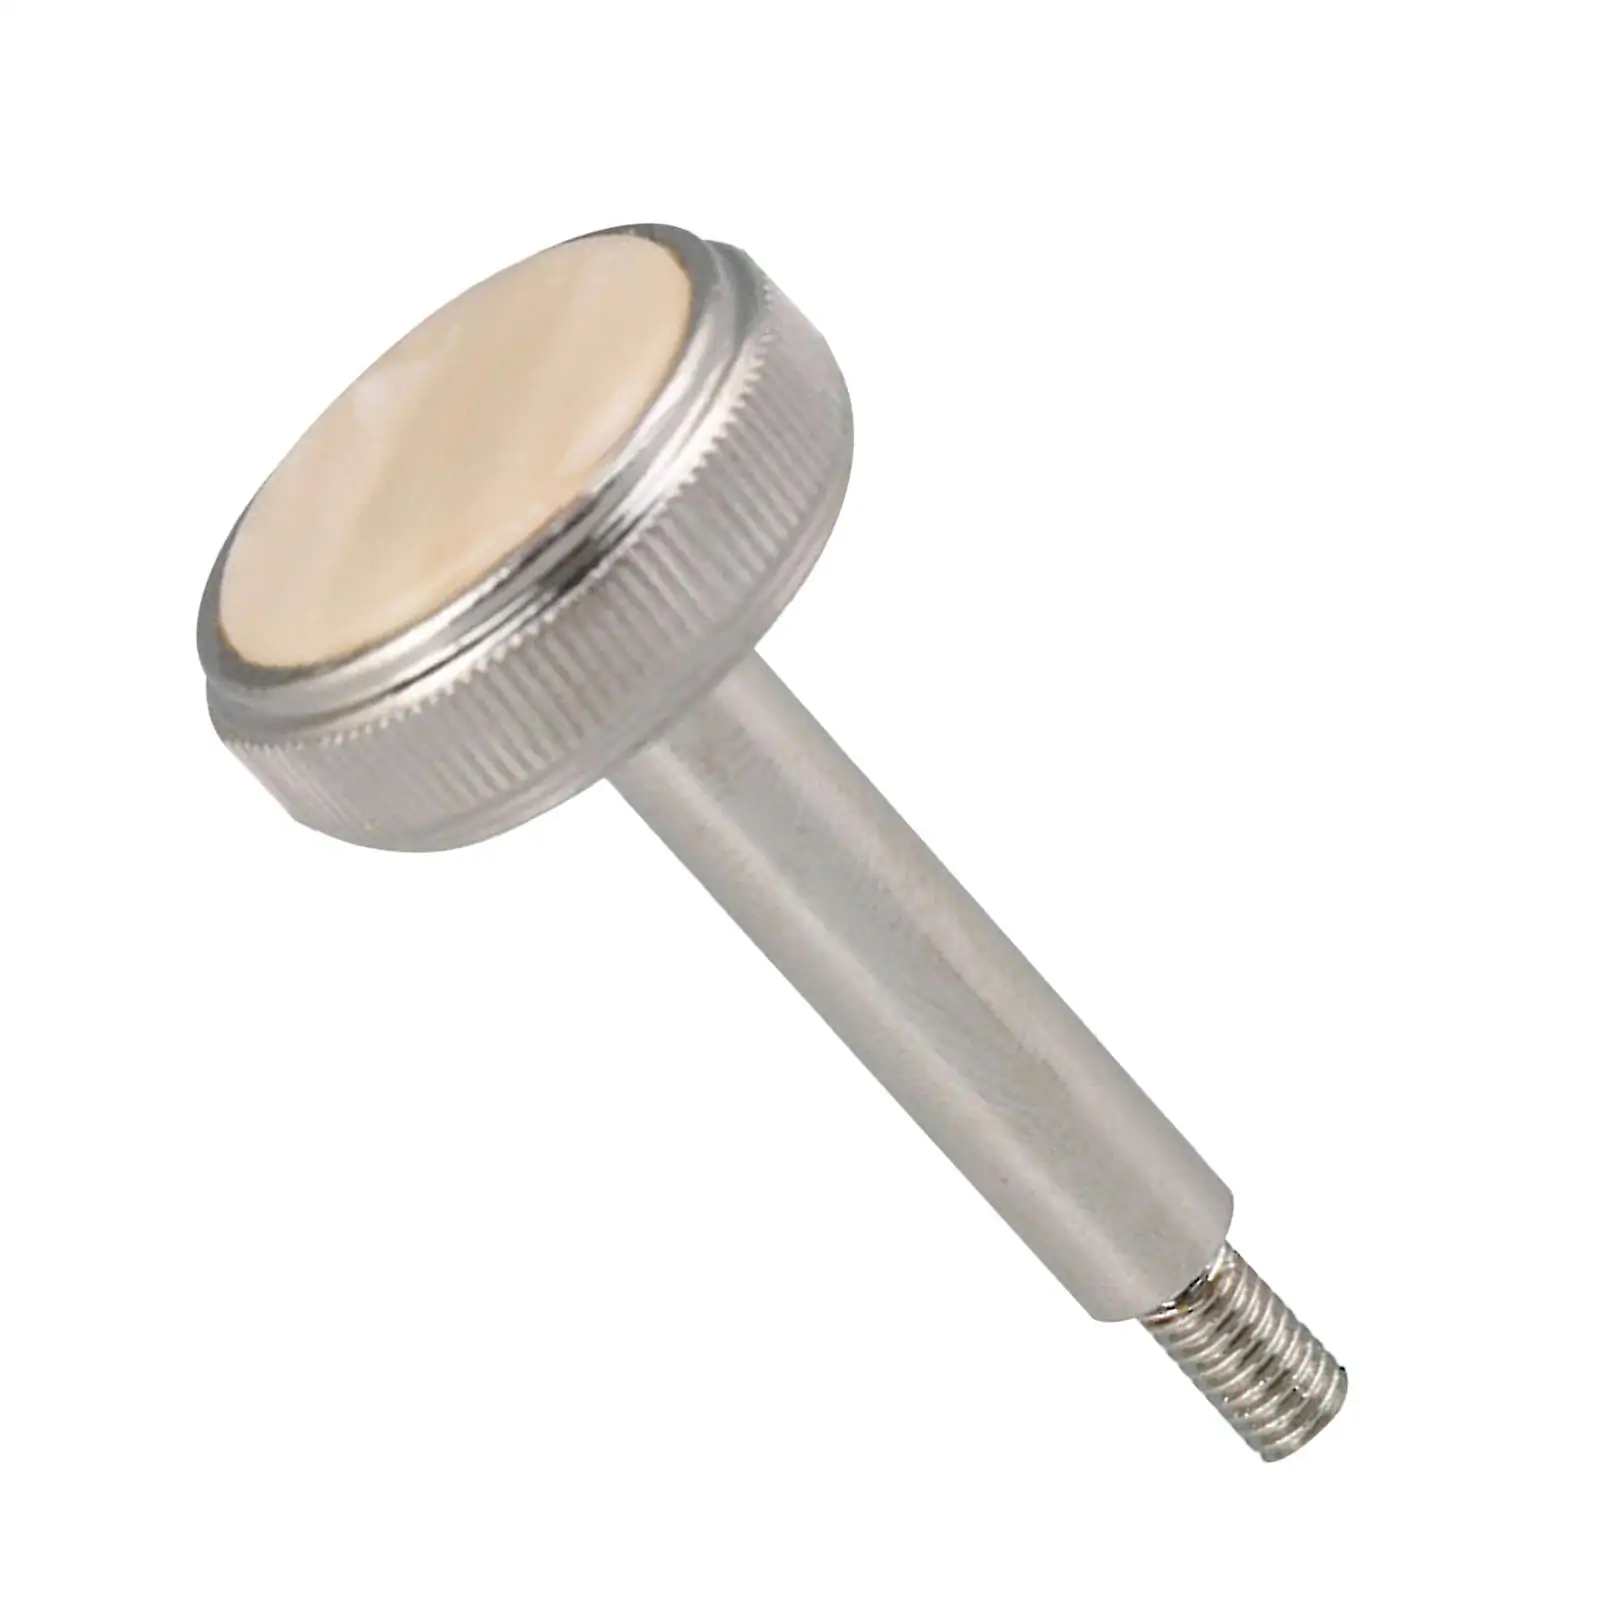 Trumpet Finger Buttons Replacement Parts Repair Tool for Euphonium Tuba